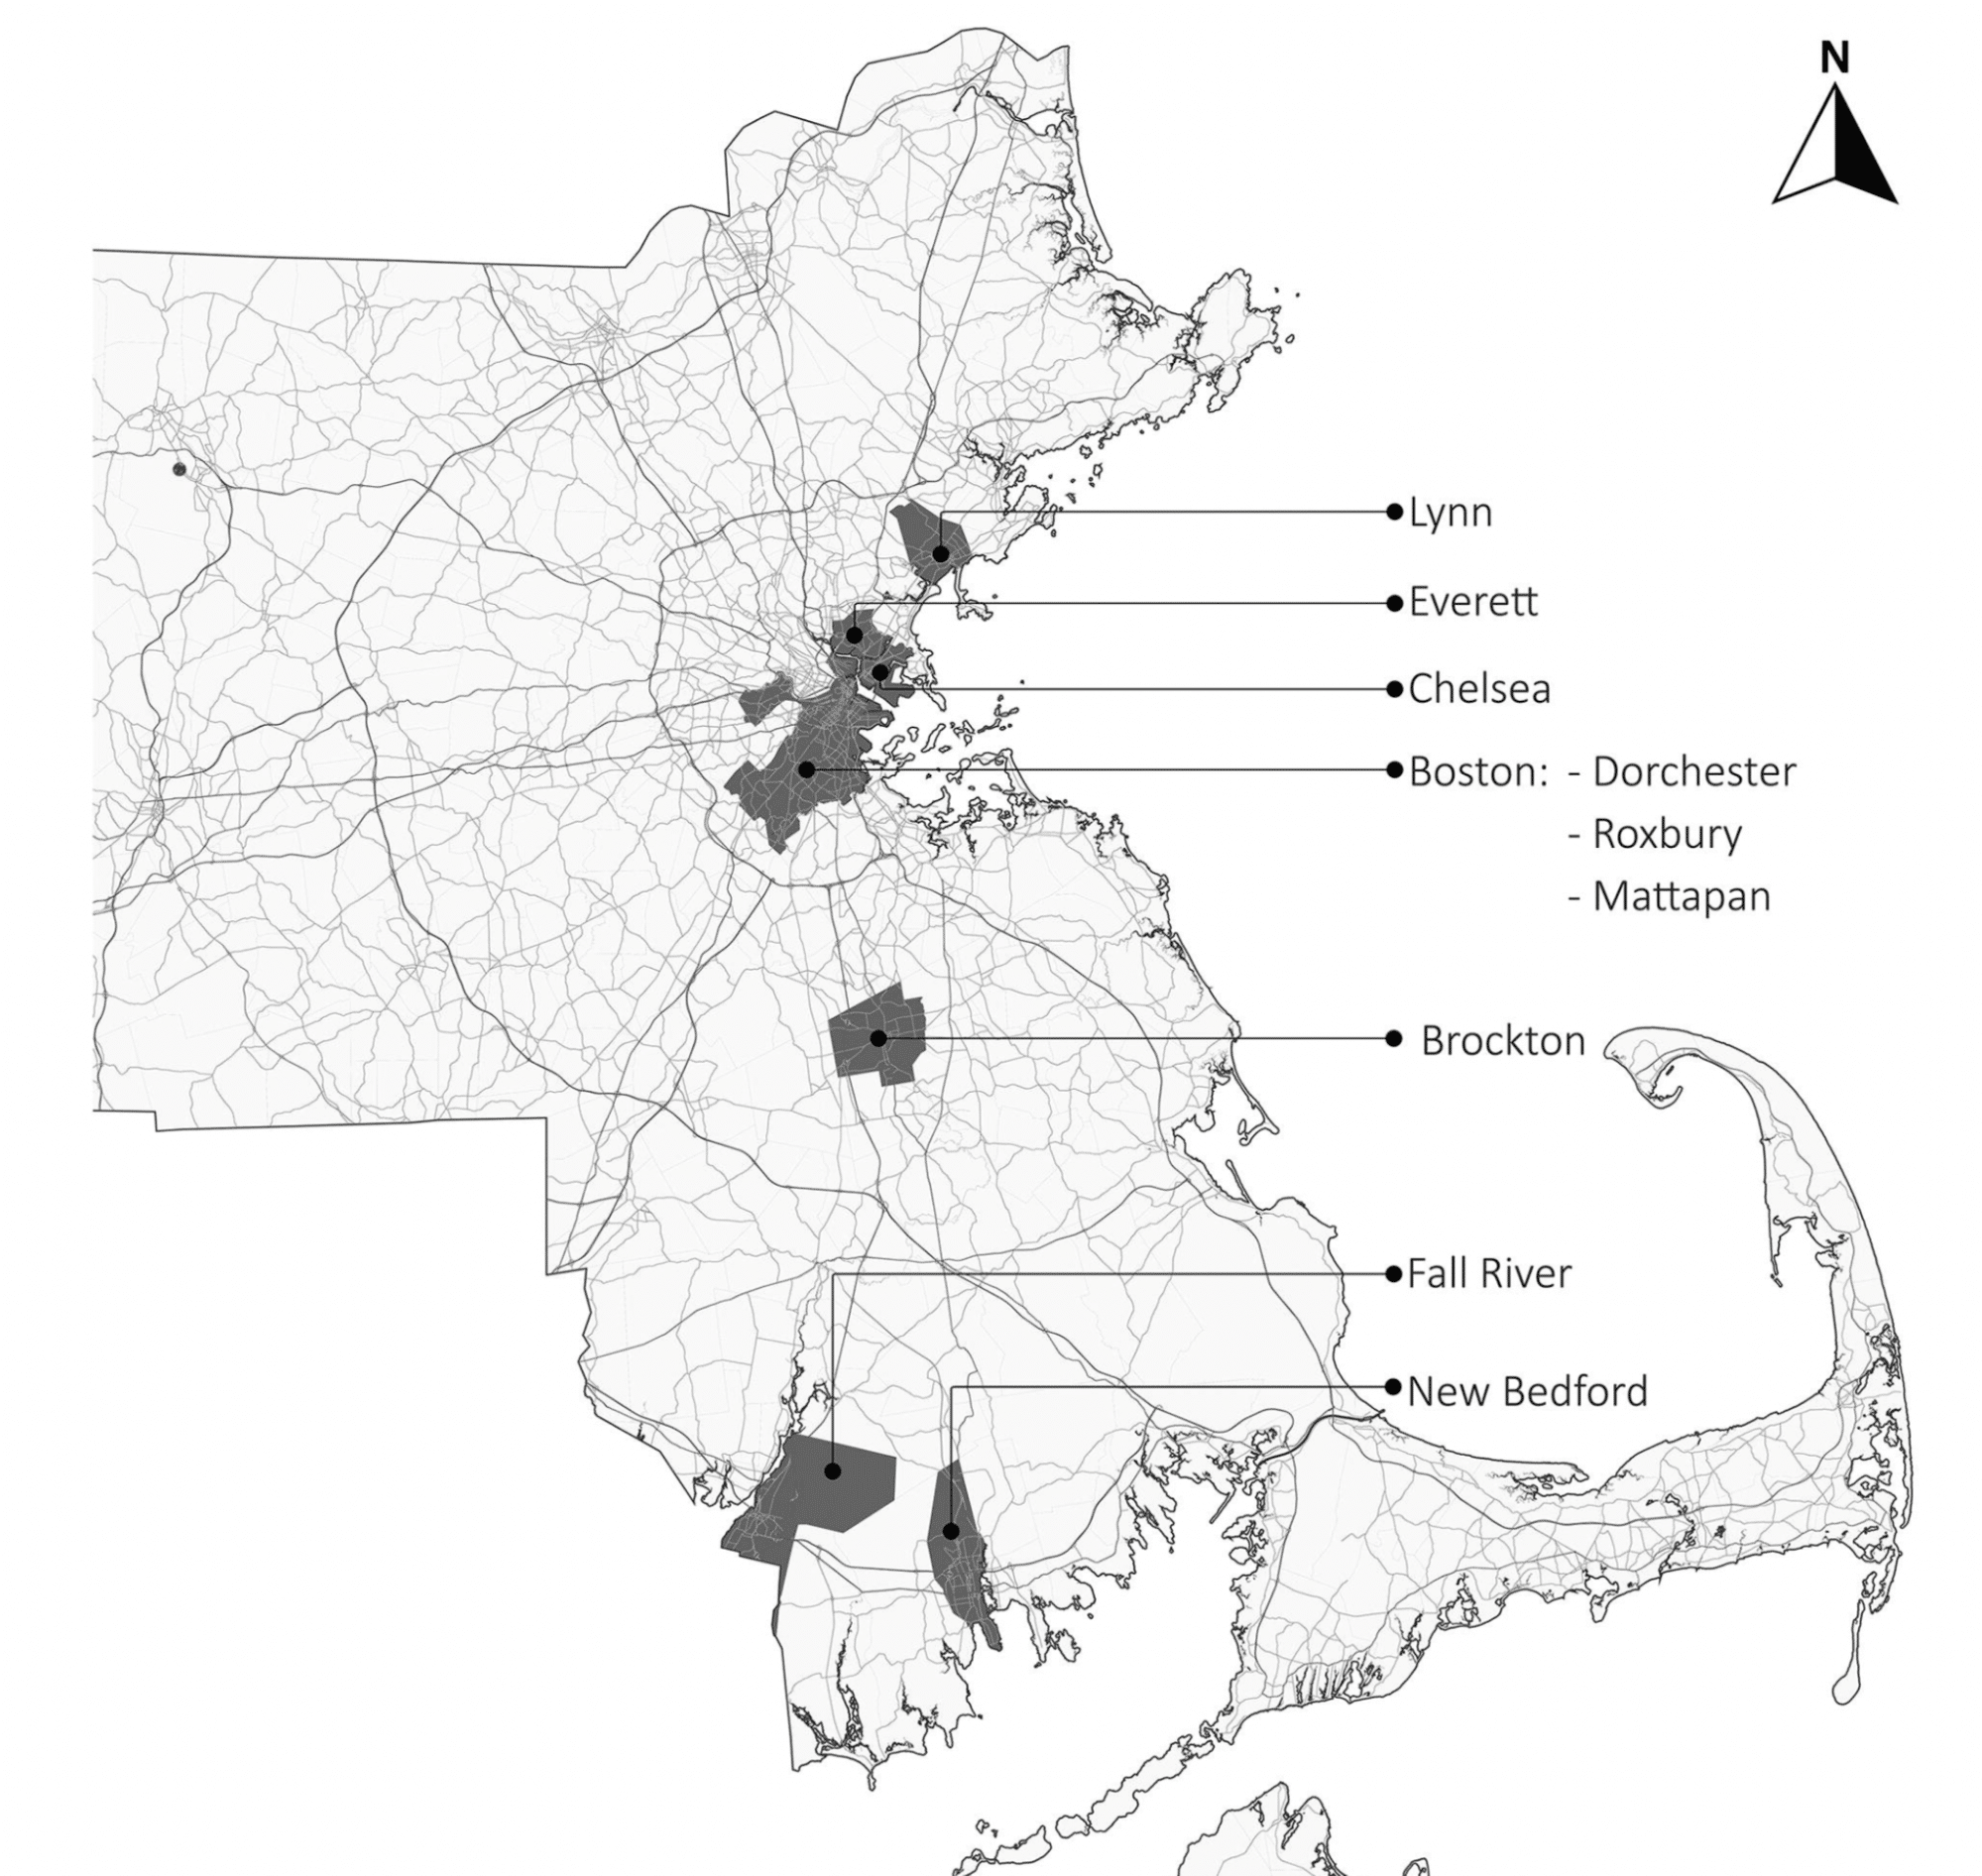 State of Massachusetts displaying the 9 communities